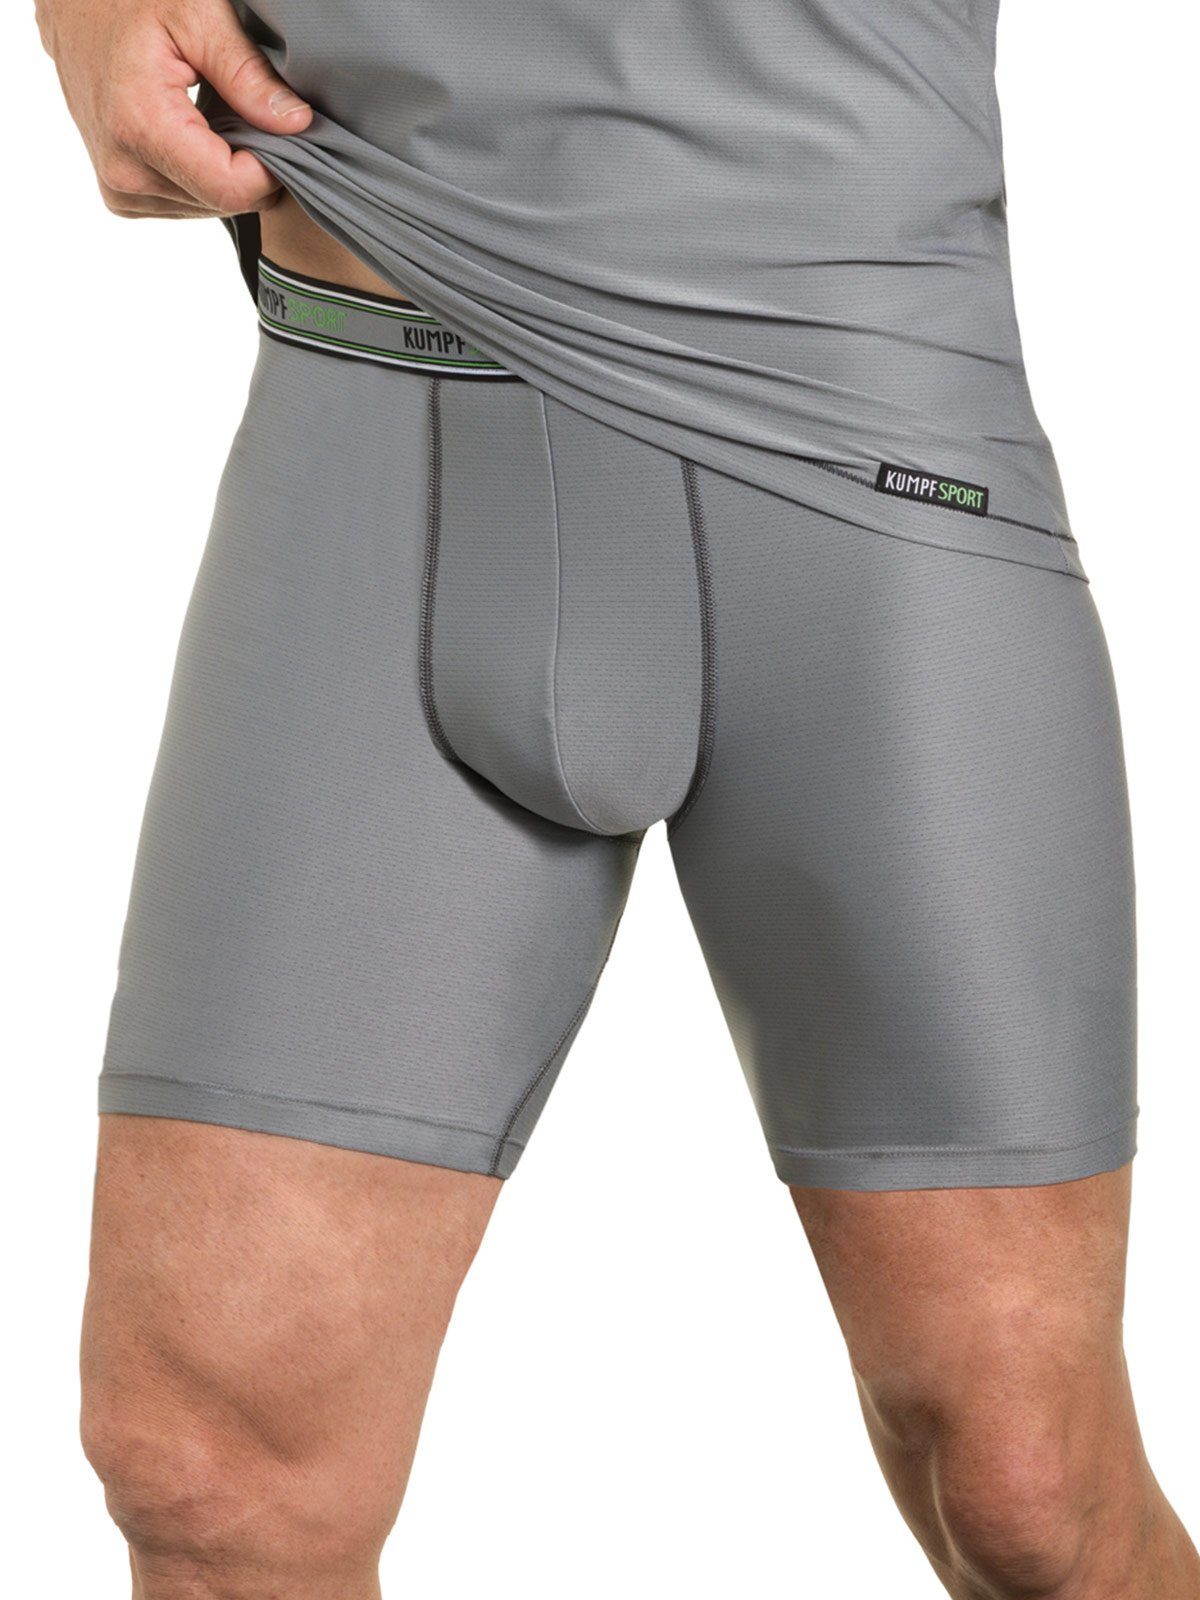 Sportwä Pants und Materialmix Bein Gummibund (Stück, grau KUMPF 1-St) Herren Pants mit Retro Tactel